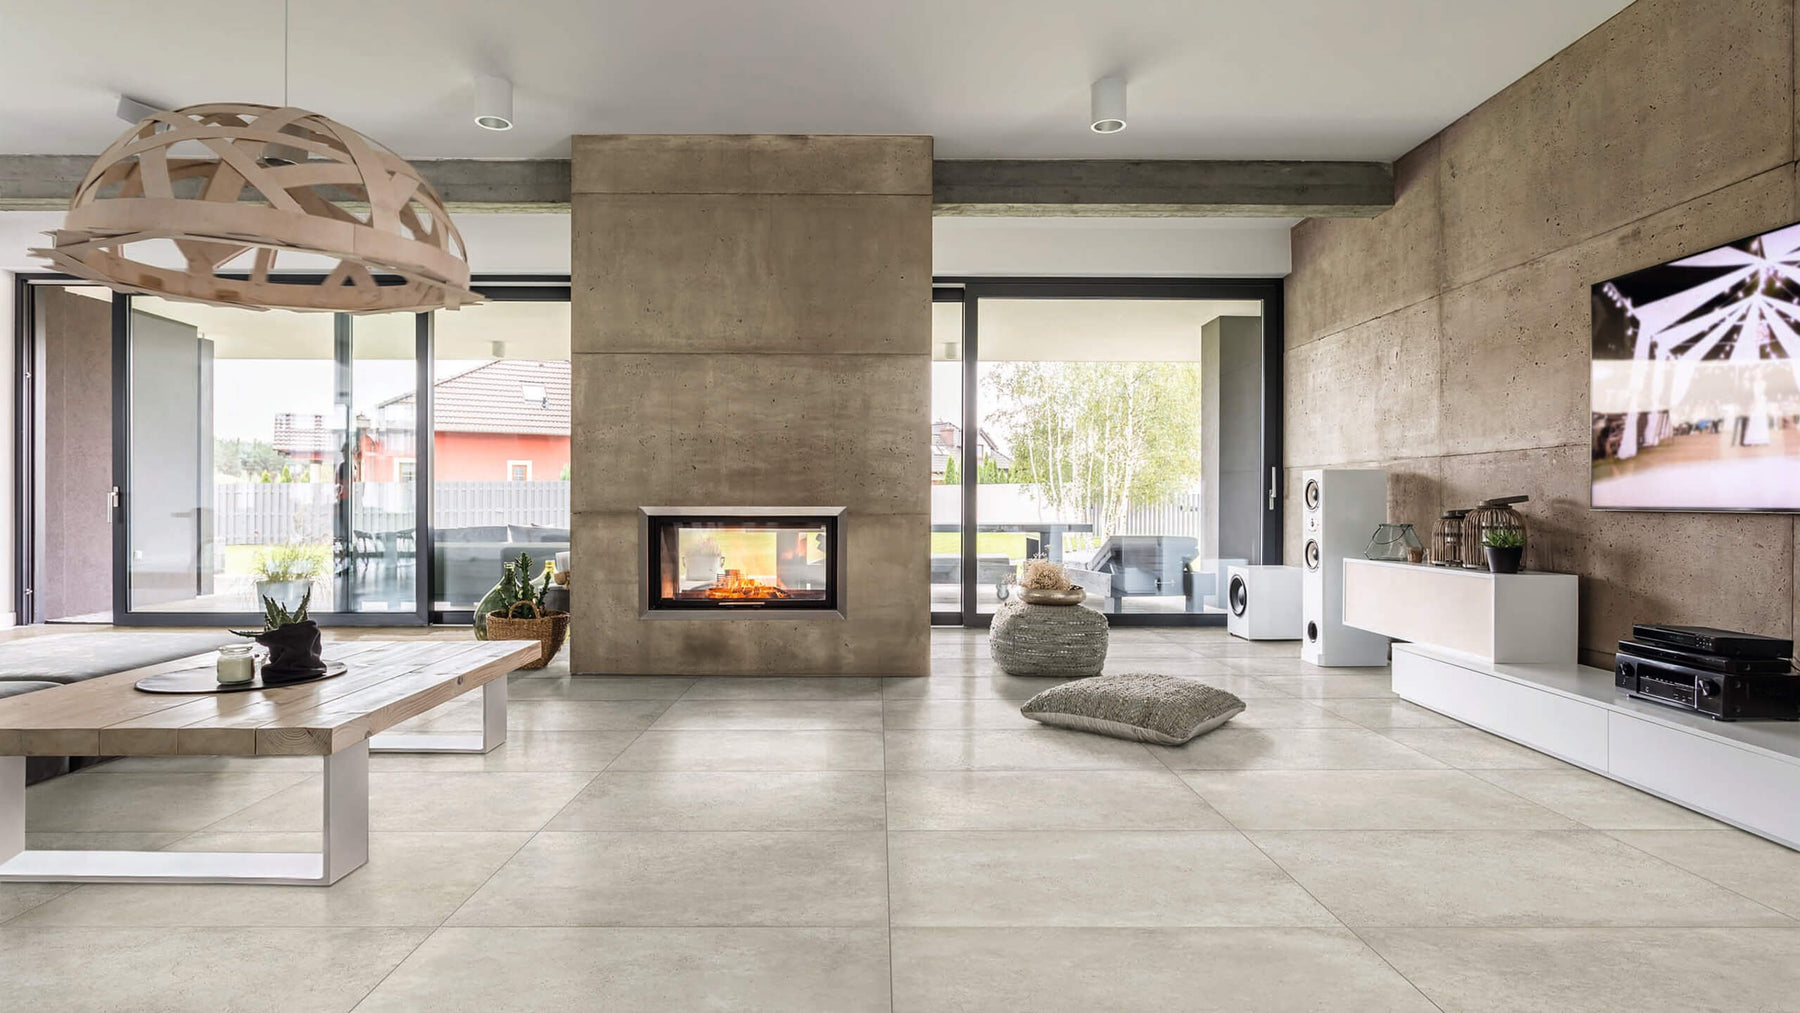 Floor Tiles Kitchen And Living Room